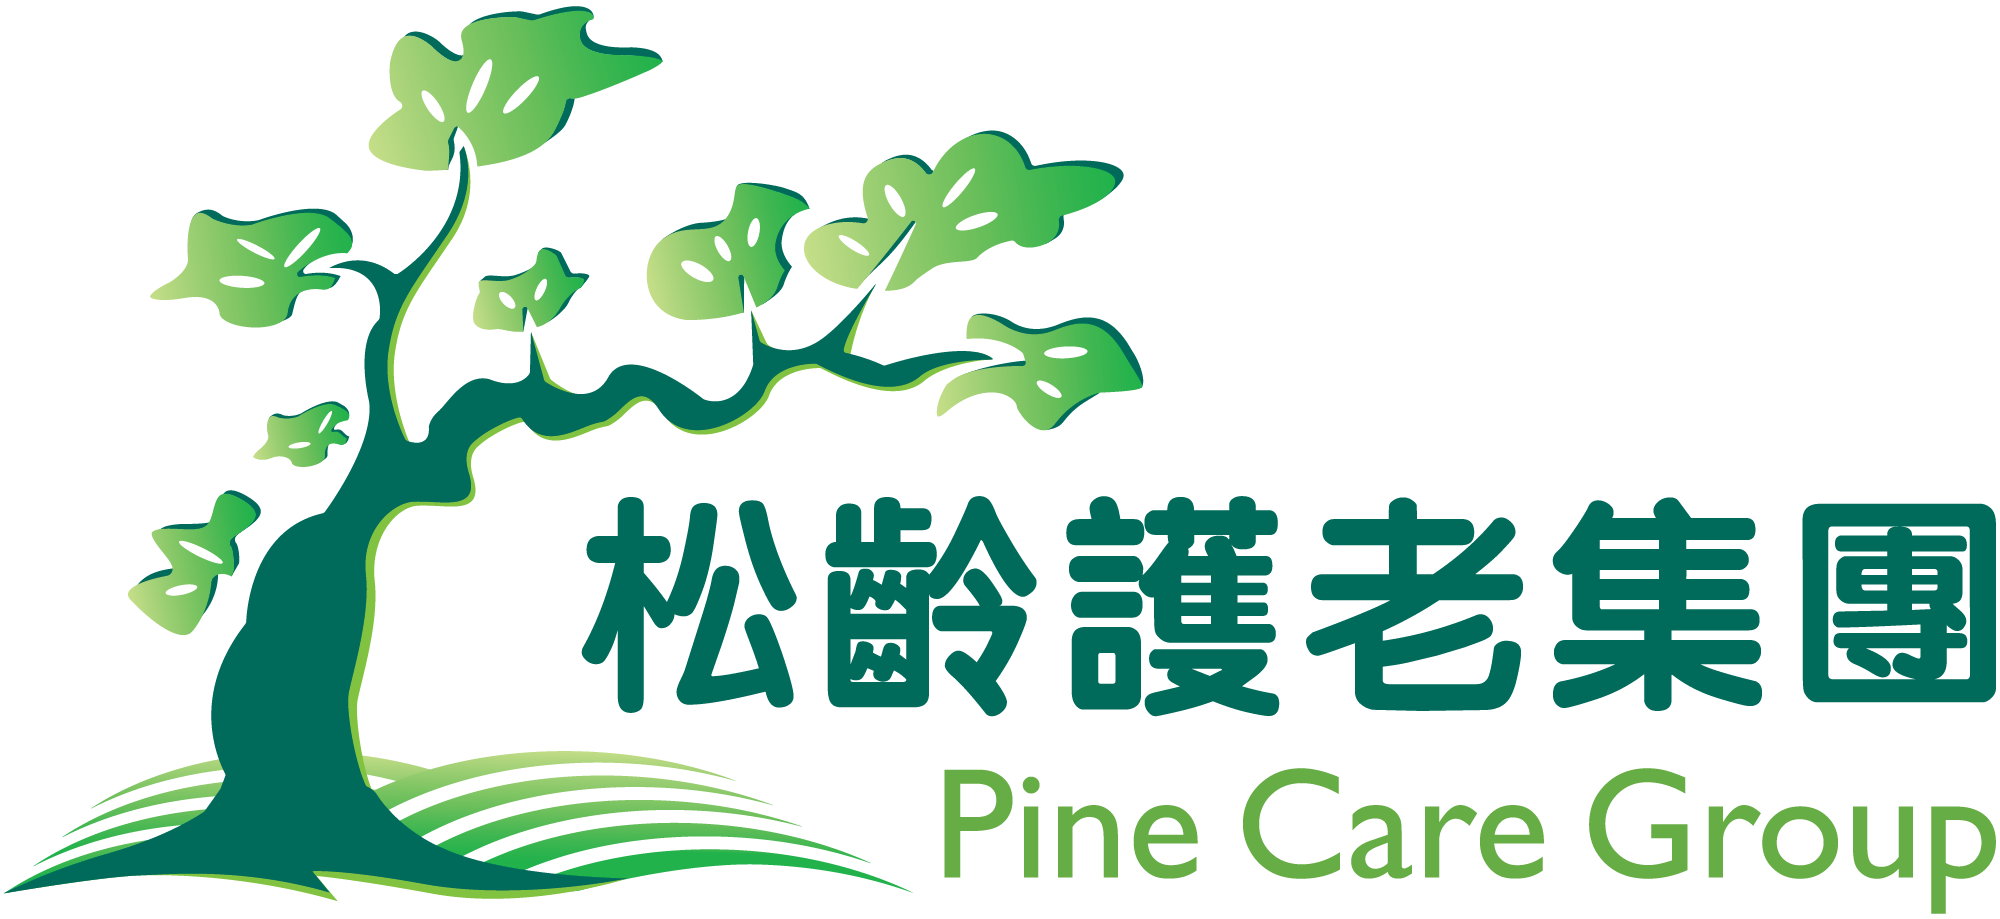 Pine Care Group Logo